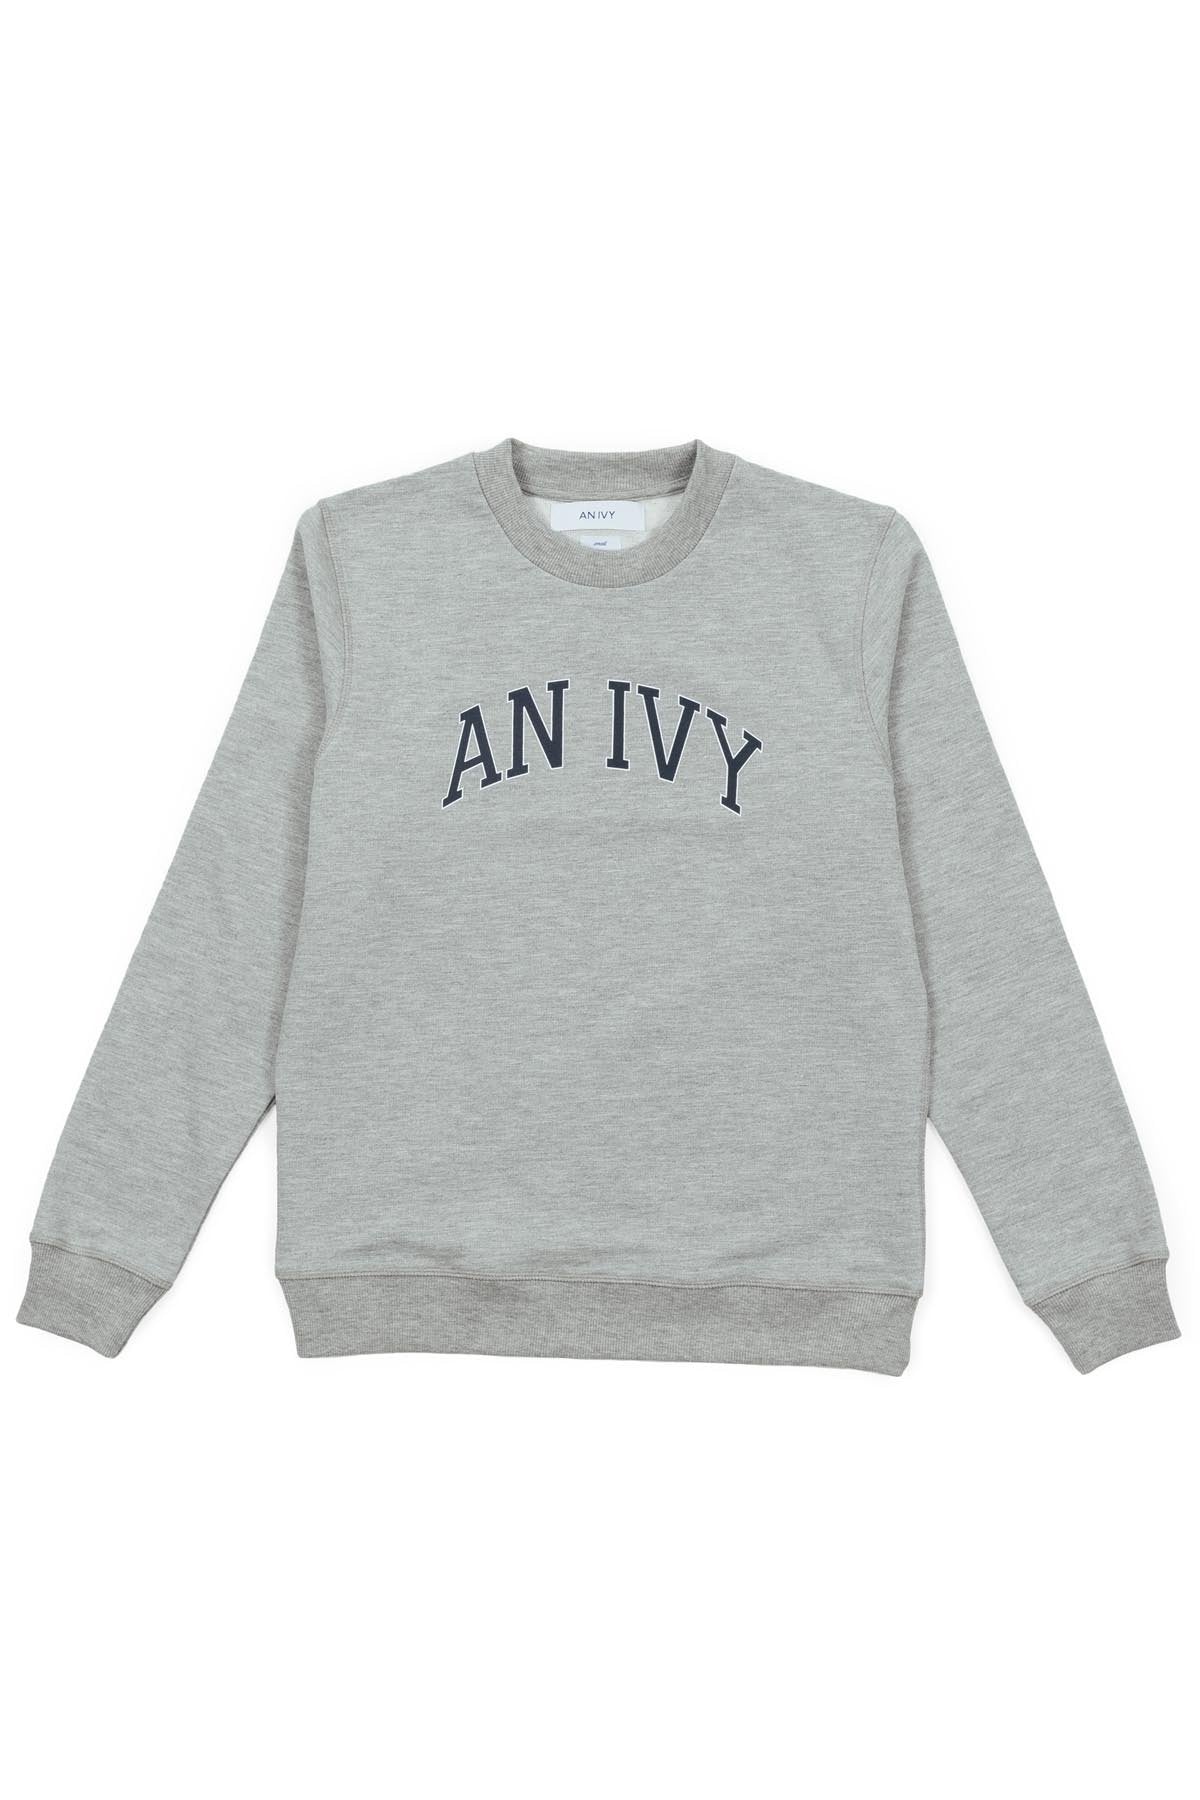 AN IVY Tøj Grey AN IVY College Sweatshirt